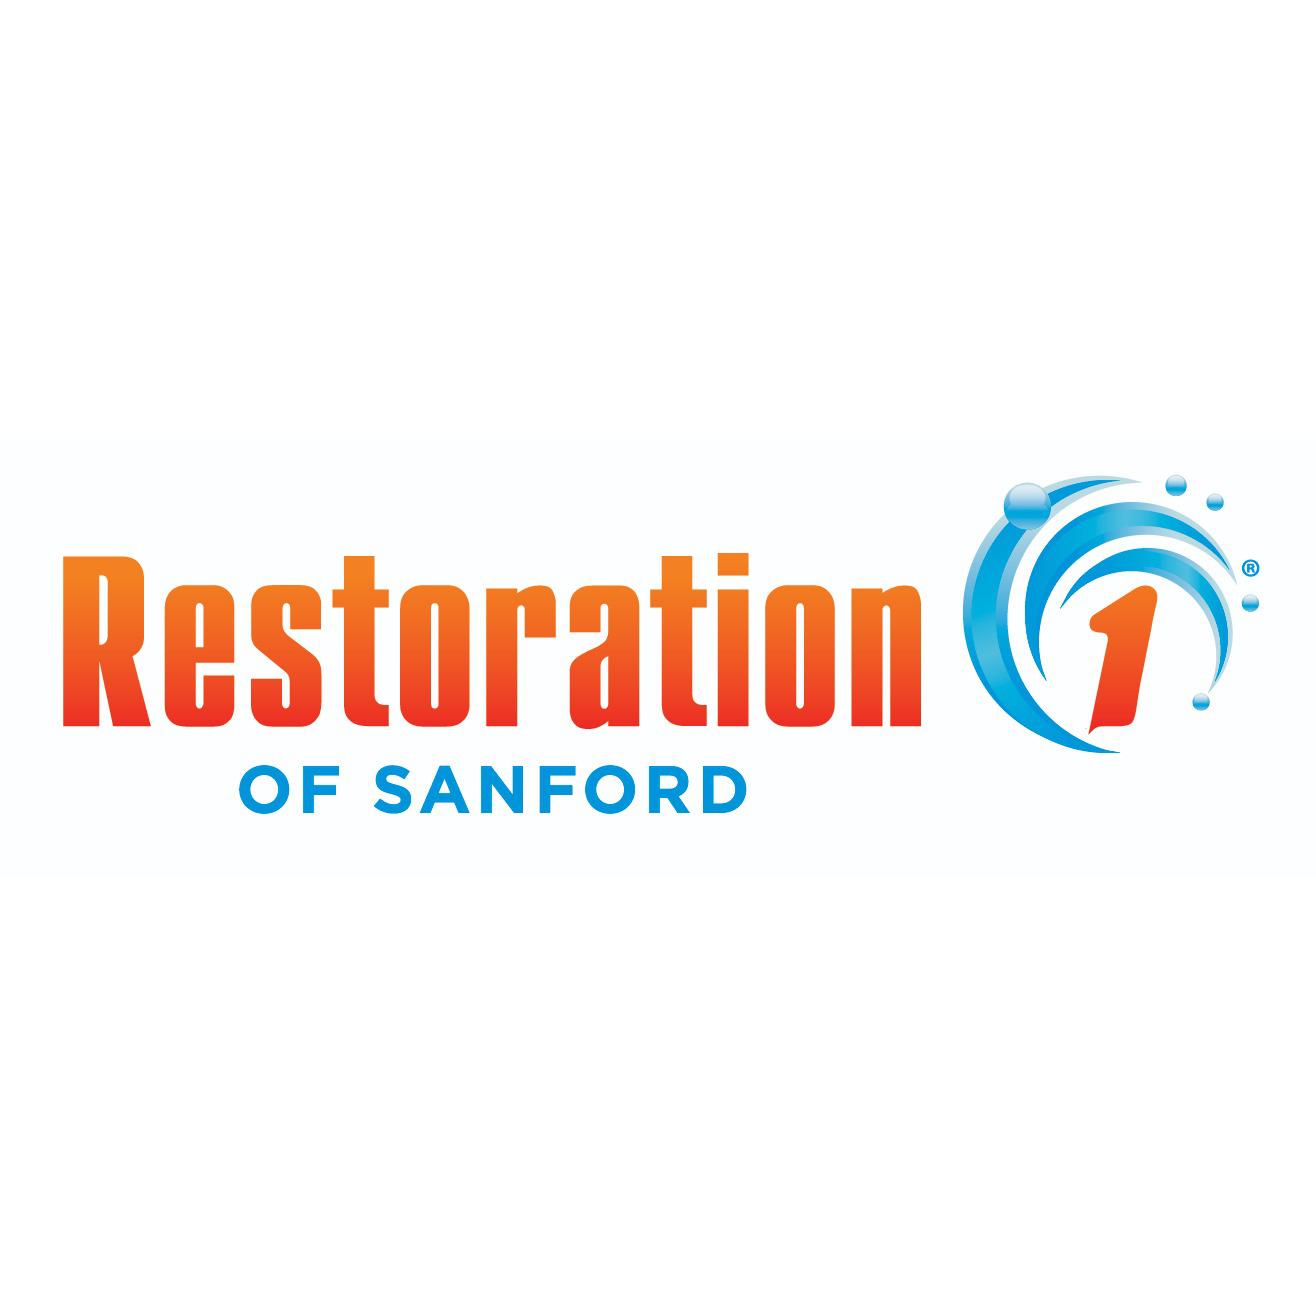 Restoration 1 of Sanford - Sanford, FL - (407)278-6124 | ShowMeLocal.com